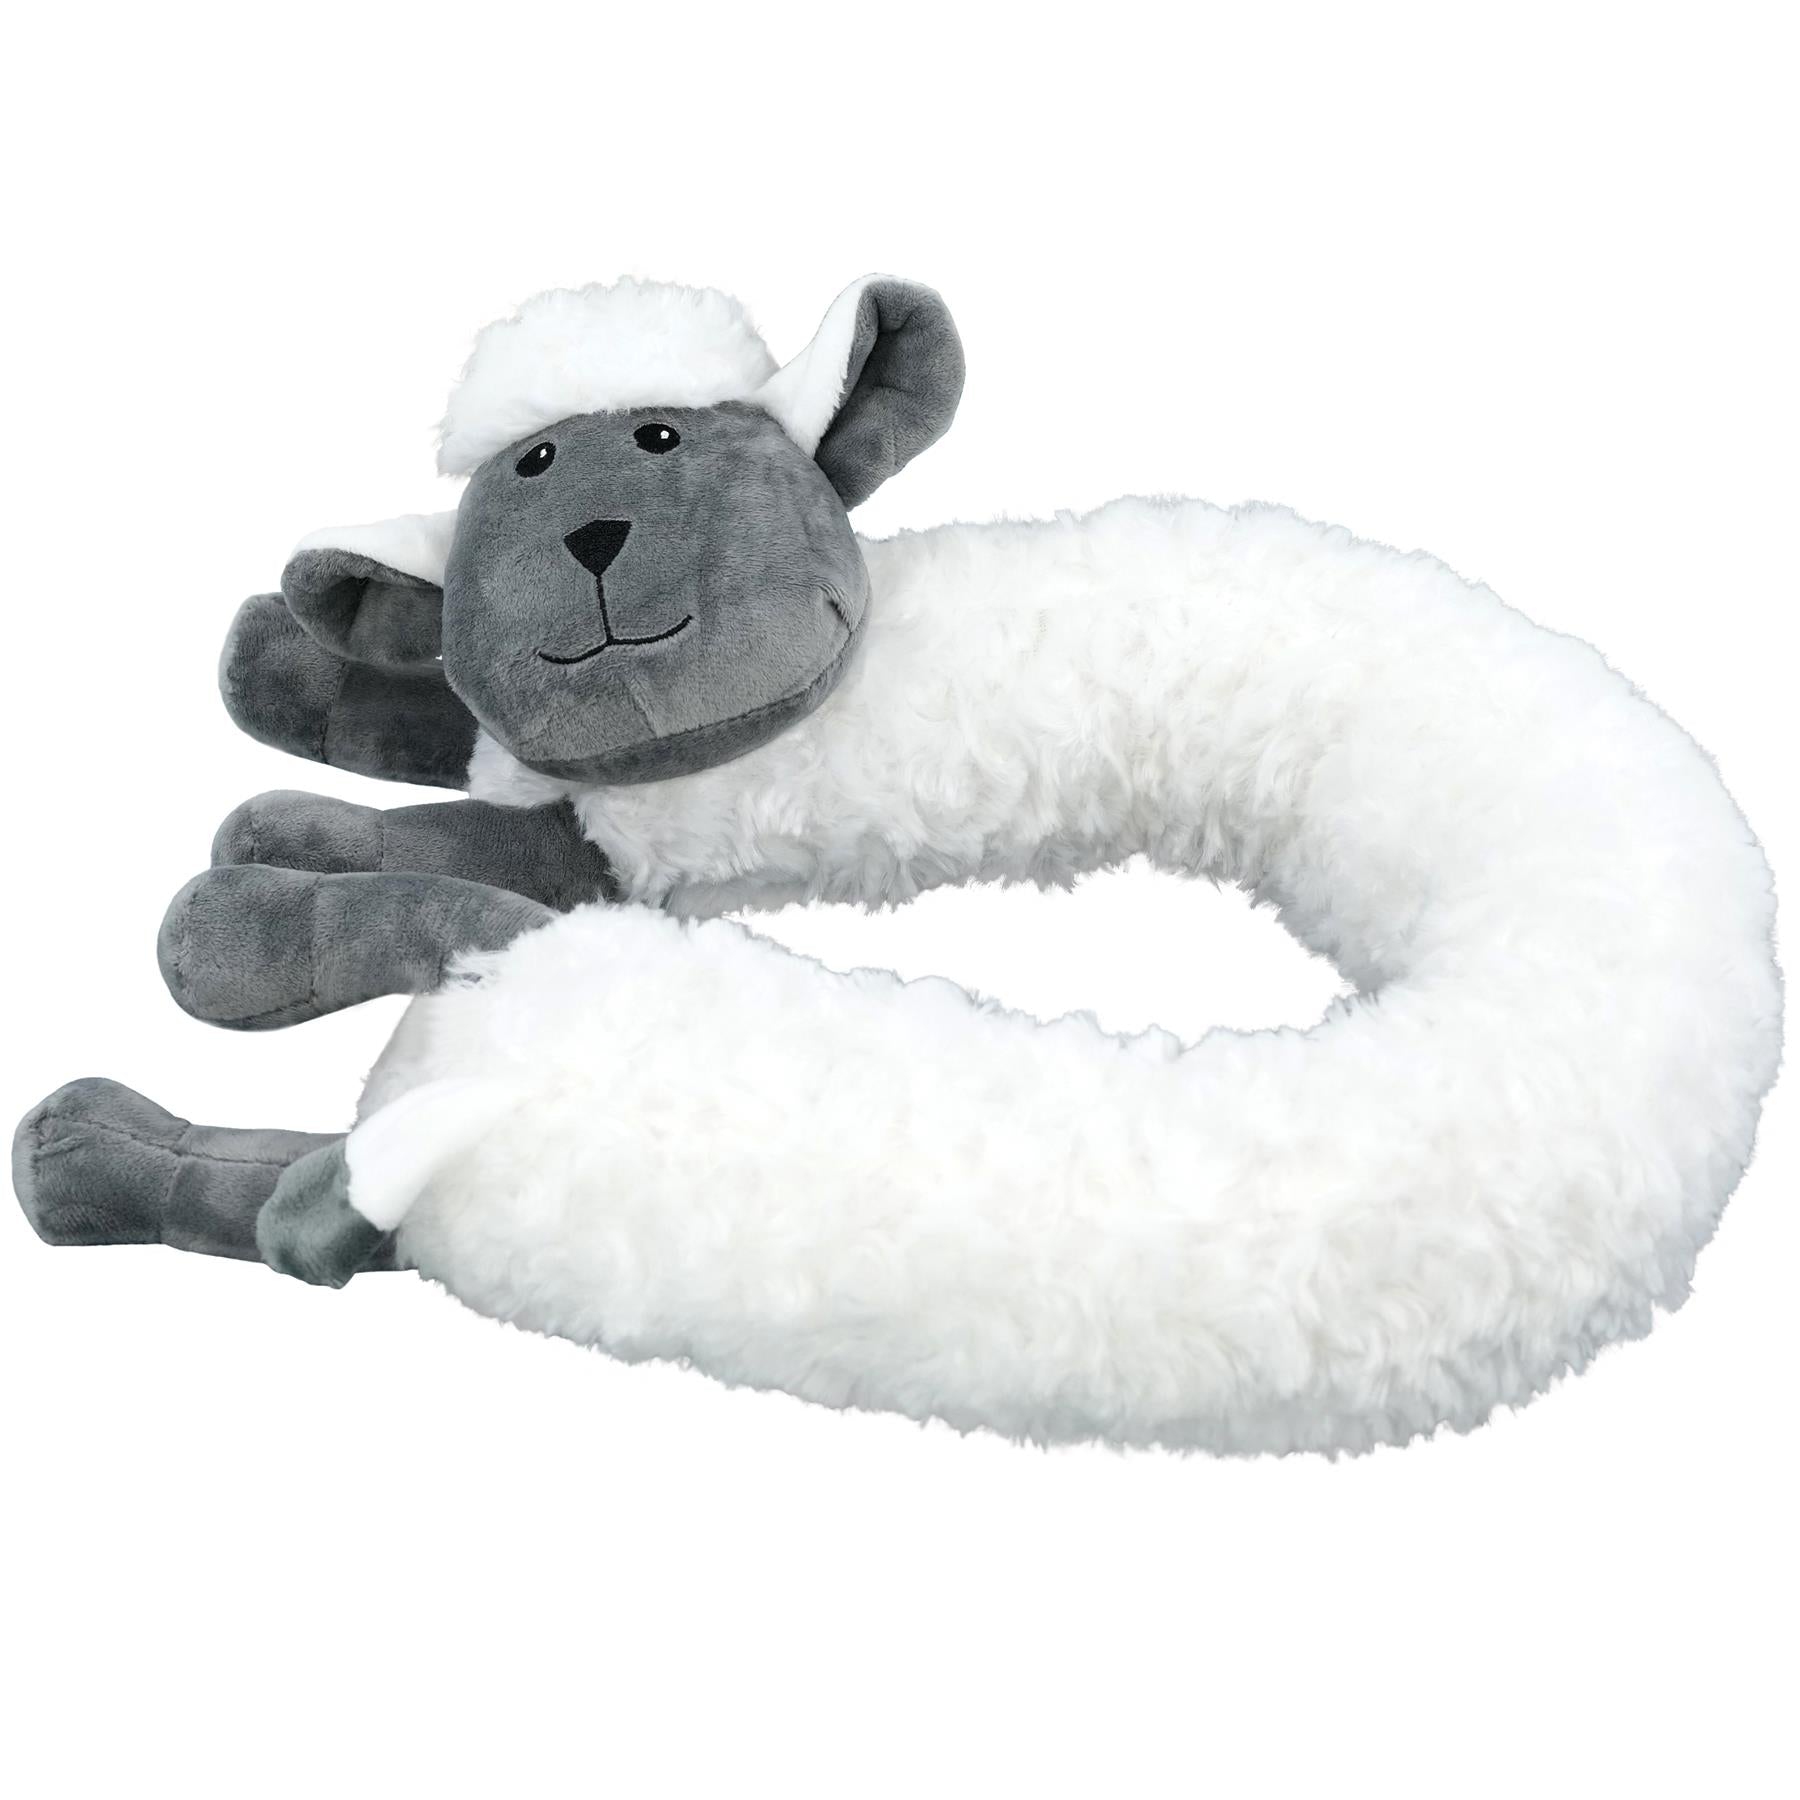 Novelty White Sheep Excluder by The Magic Toy Shop - UKBuyZone